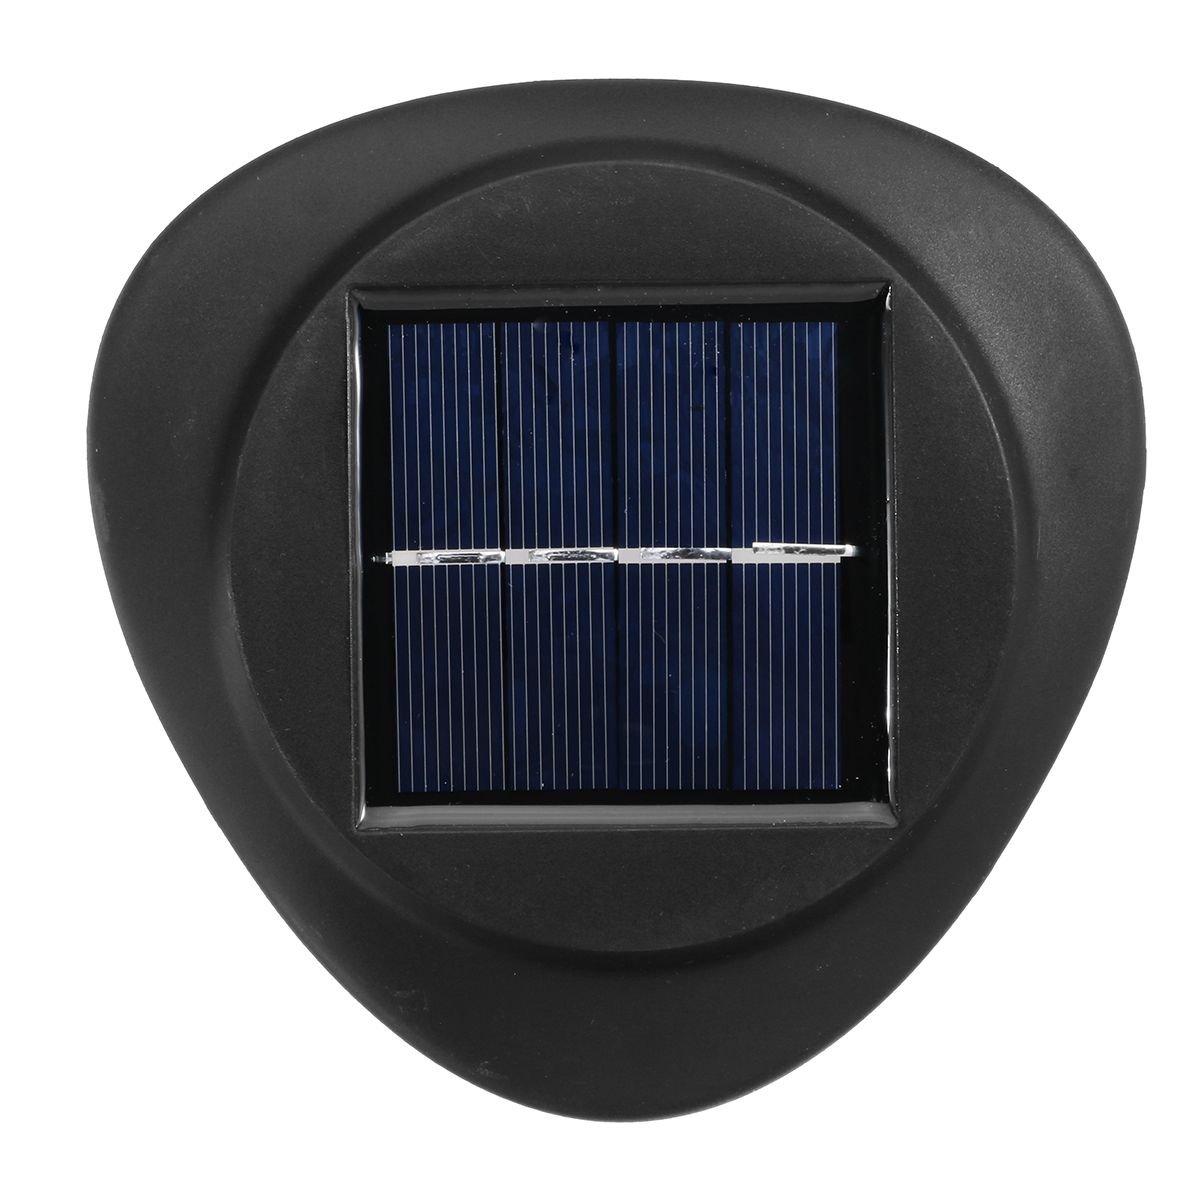 Solar-Powered-9-LED-Light-Sensor-Garden-Security-Wall-Lamp-Outdoor-Waterproof-1370202